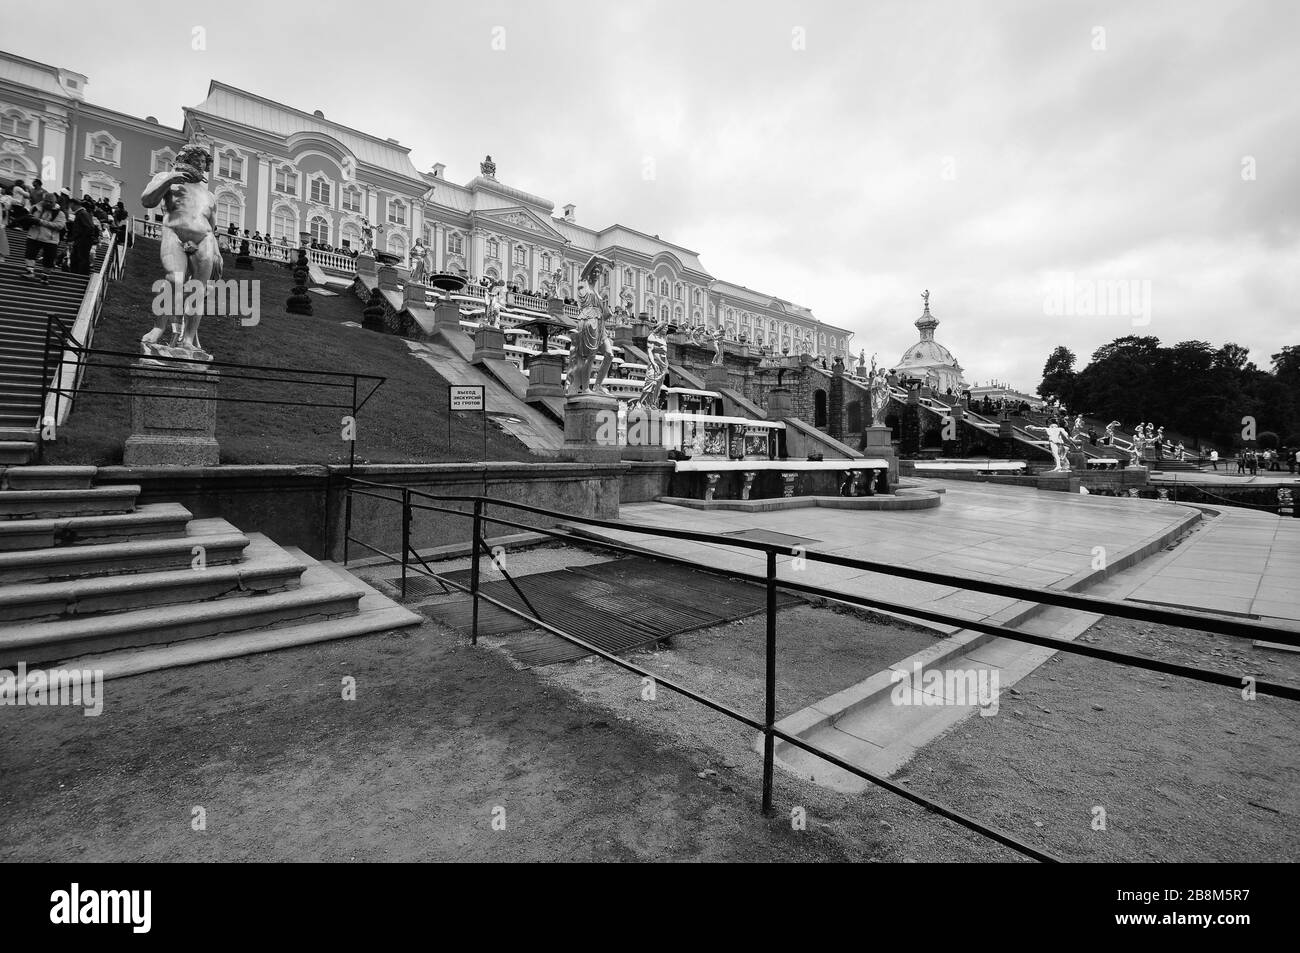 The Peterhof Palace Stock Photo